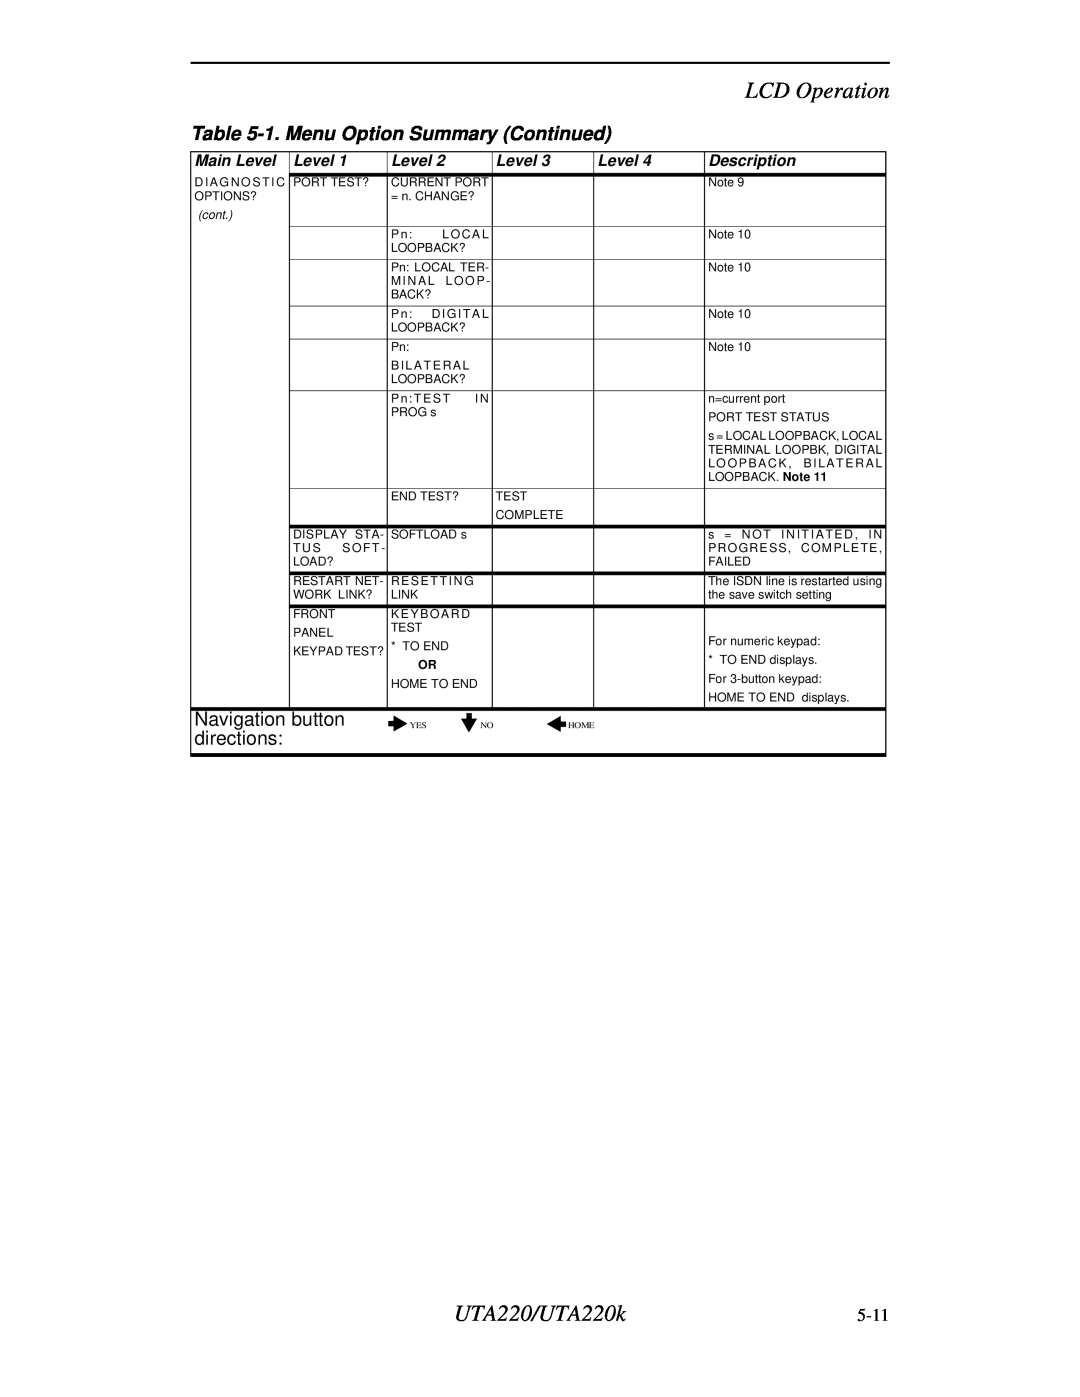 Northern UTA220/UTA220k manual LCD Operation, 1. Menu Option Summary Continued, Main Level, Description, cont 